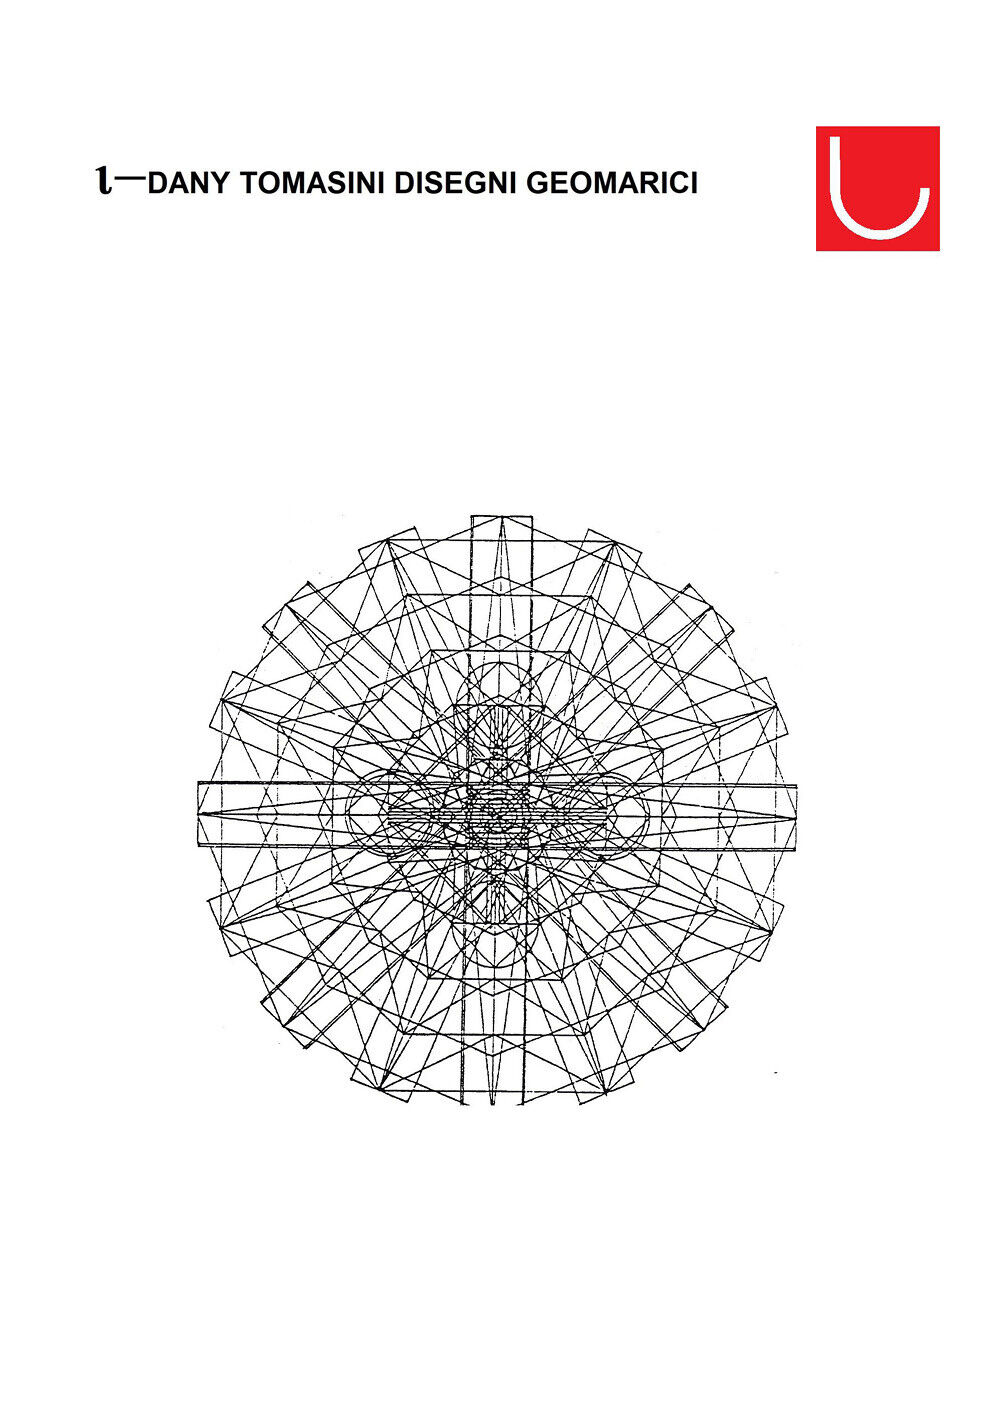 I disegni geometrici di Daniele Tomasini,  2019,  Youcanprint